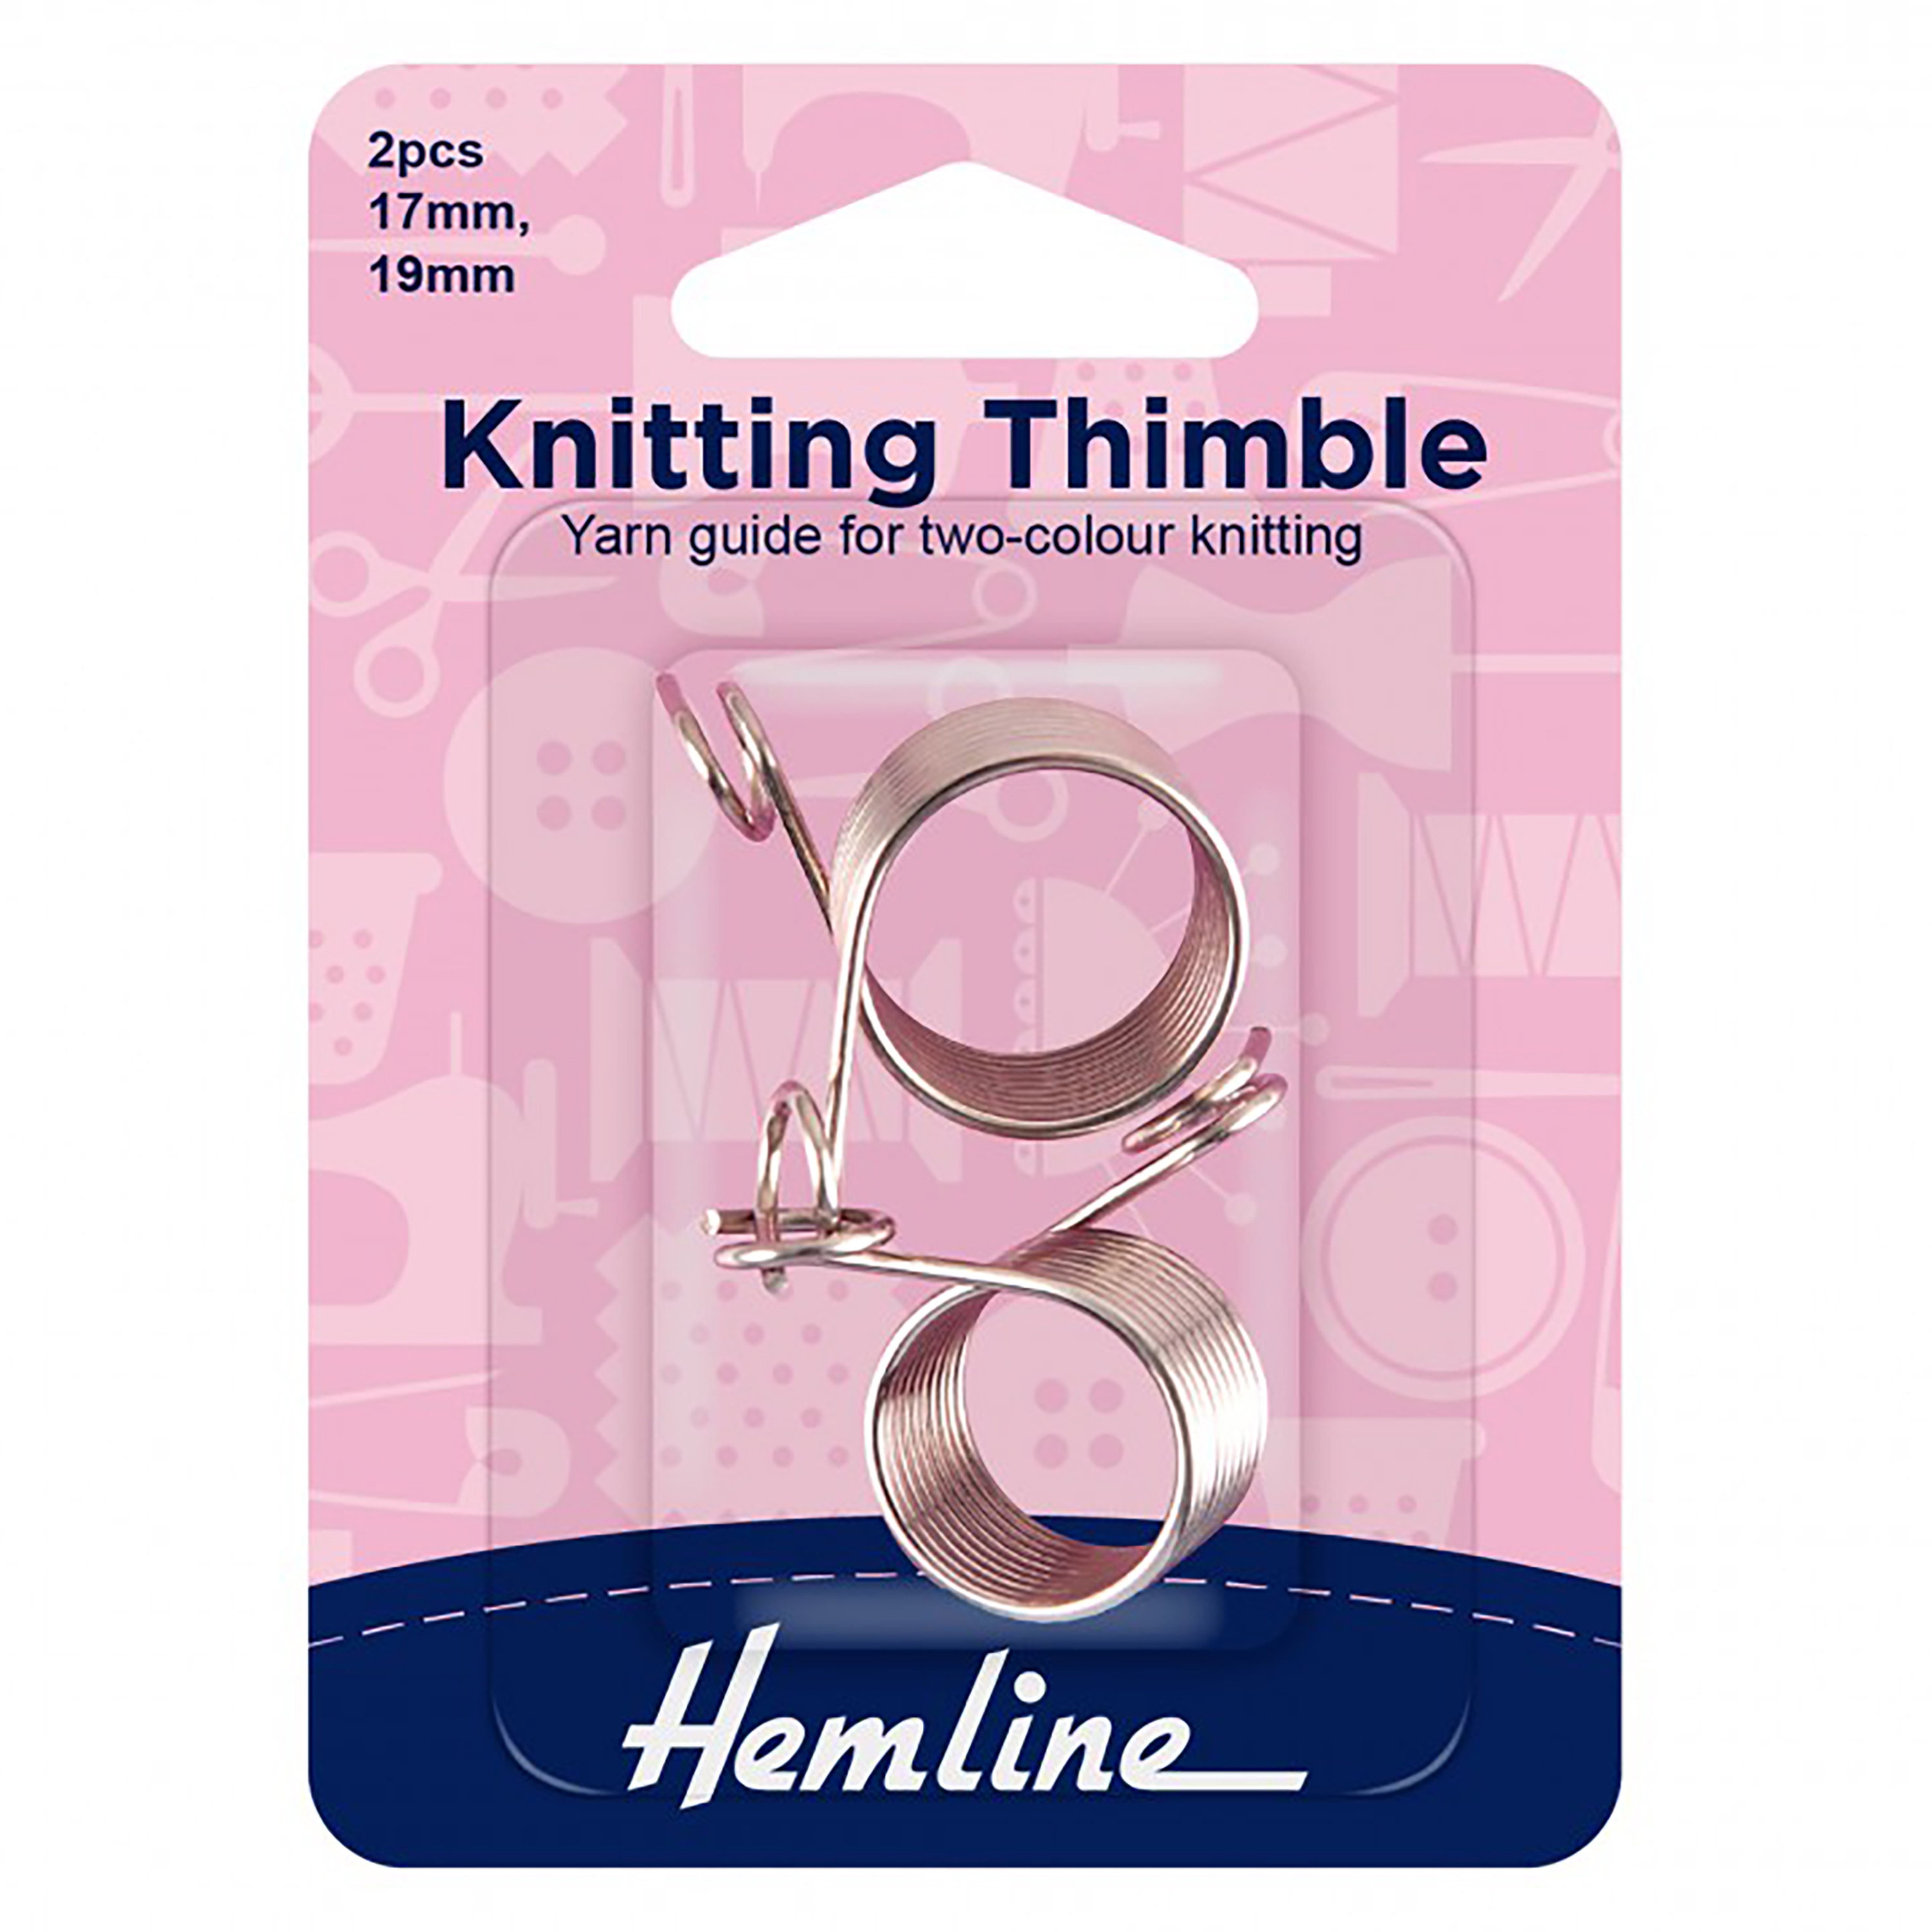 Prym Metal Knitting Thimble Norwegian With 2 Yarn Guides 624144 624147 Knitting  Thimble with 4 yarn guides - AliExpress